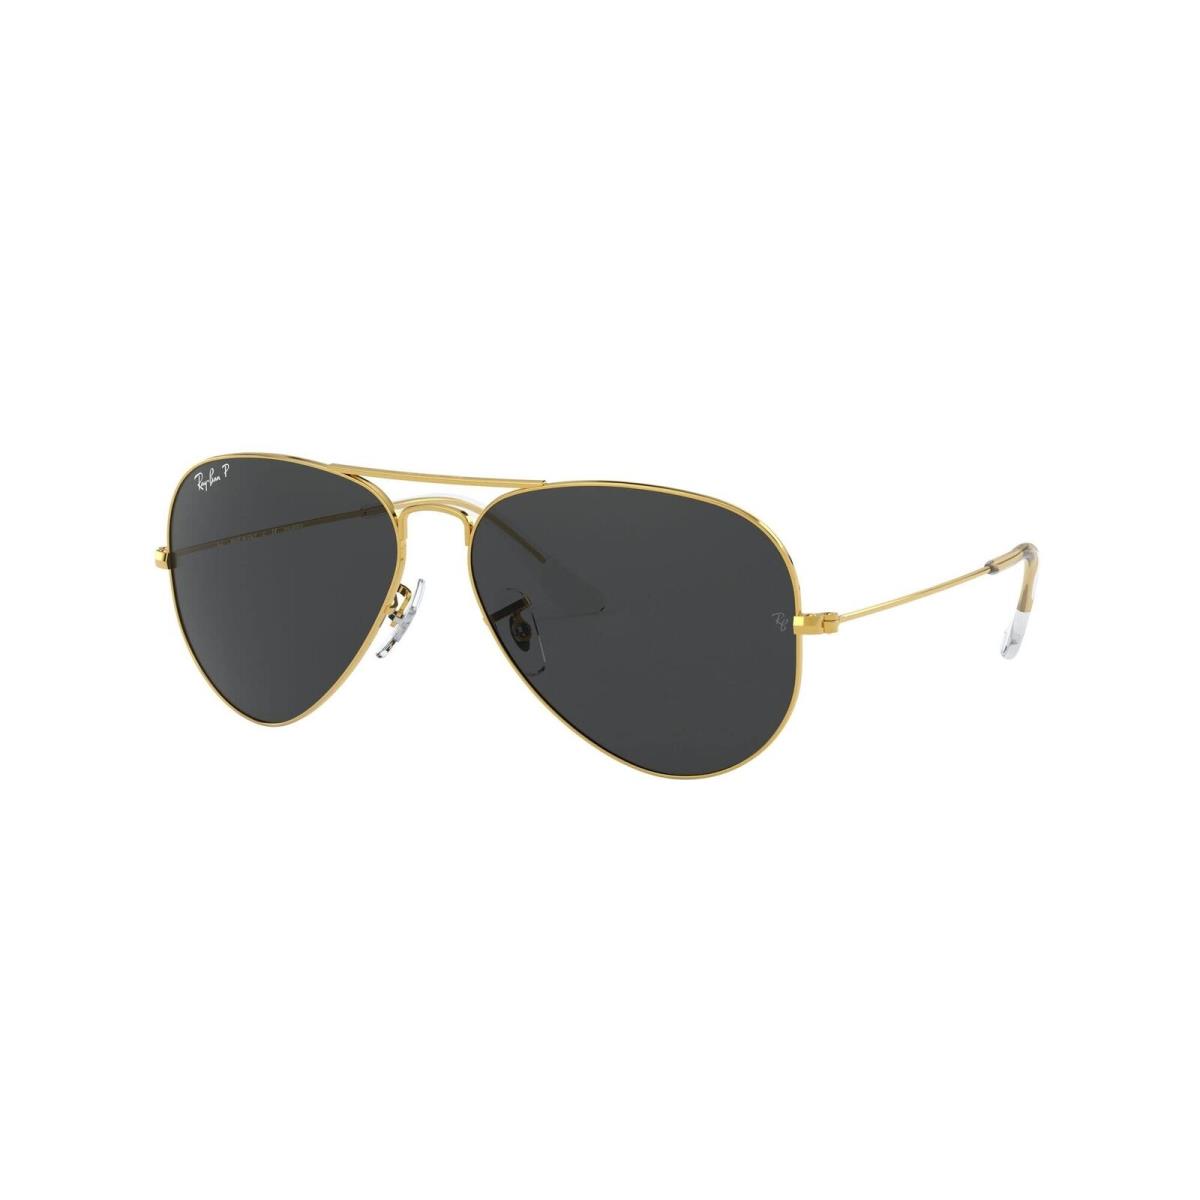 Ray-ban RB3025 Classic Aviator Sunglasses Legend Gold/polarized Black 62 mm - Legend Gold/Polarized Black, Frame: Gold, Lens: Black